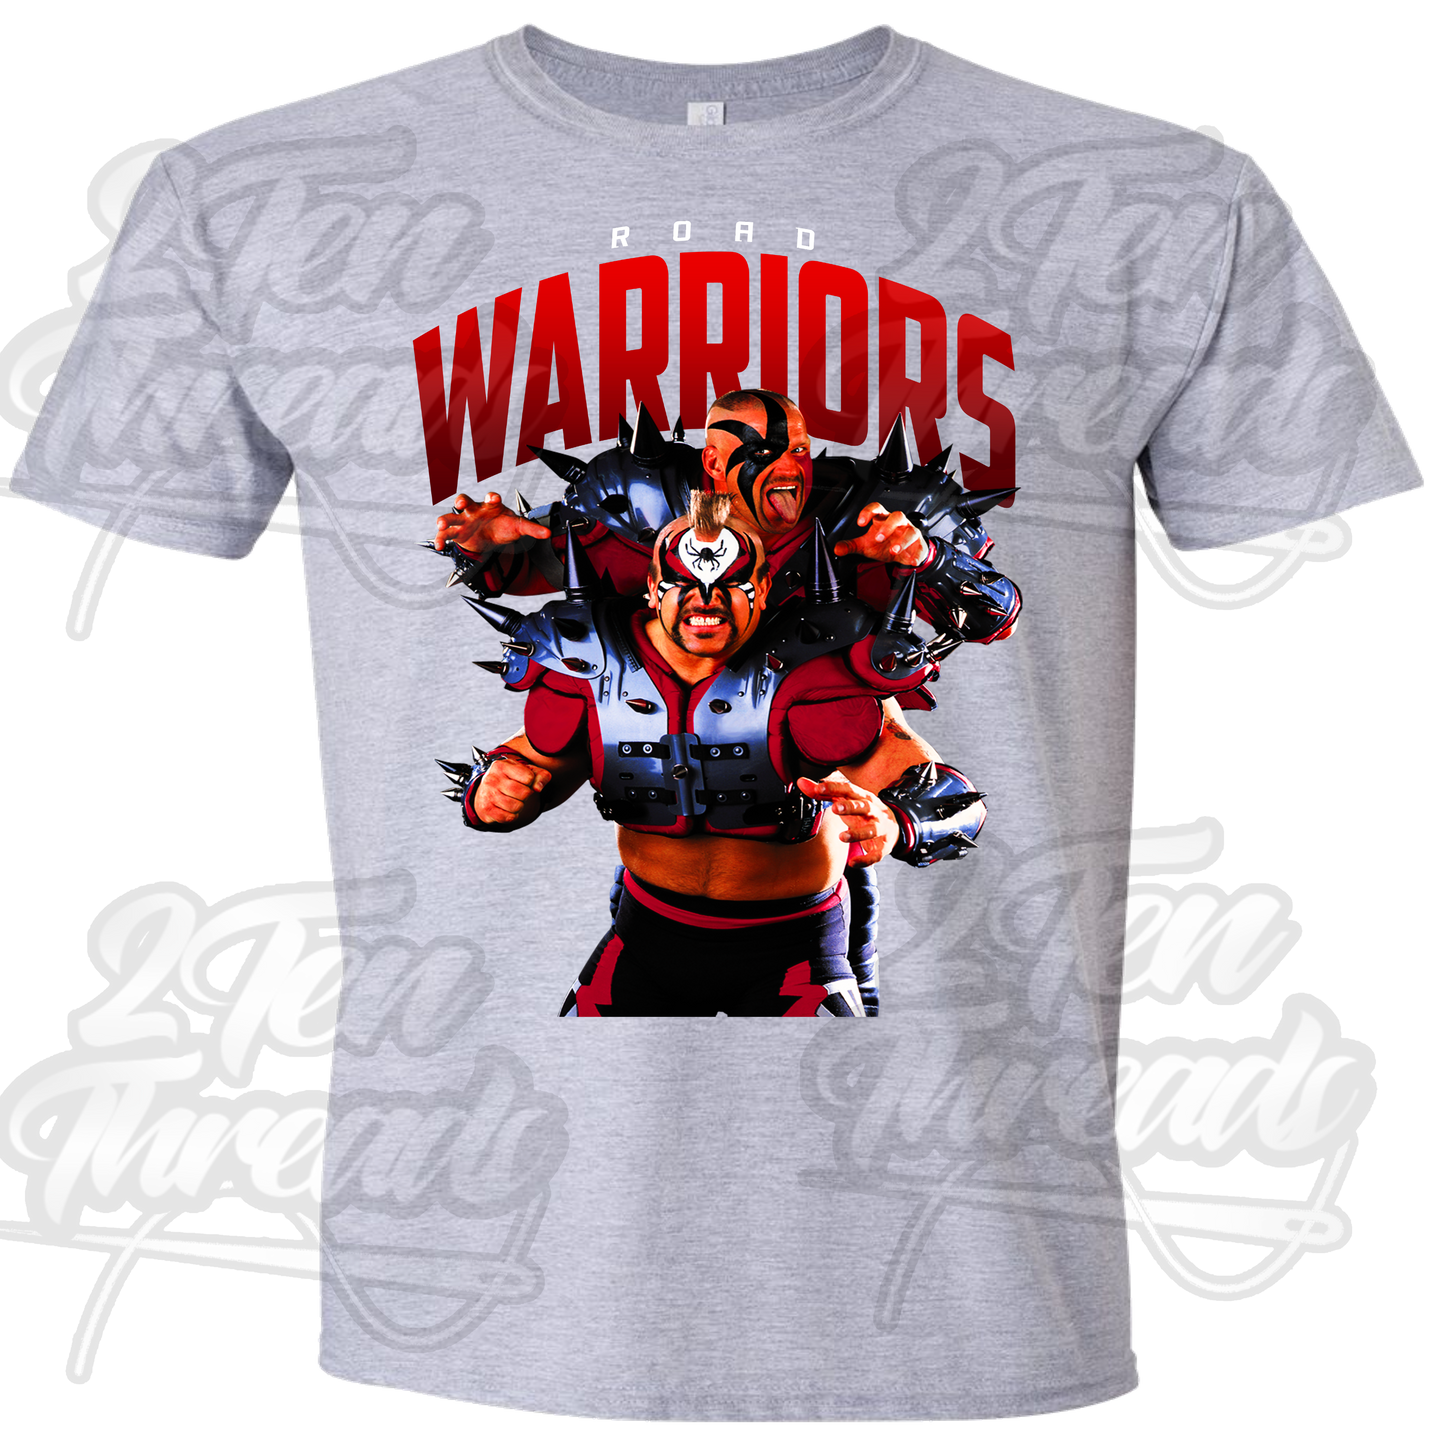 Road Warriors Shirt